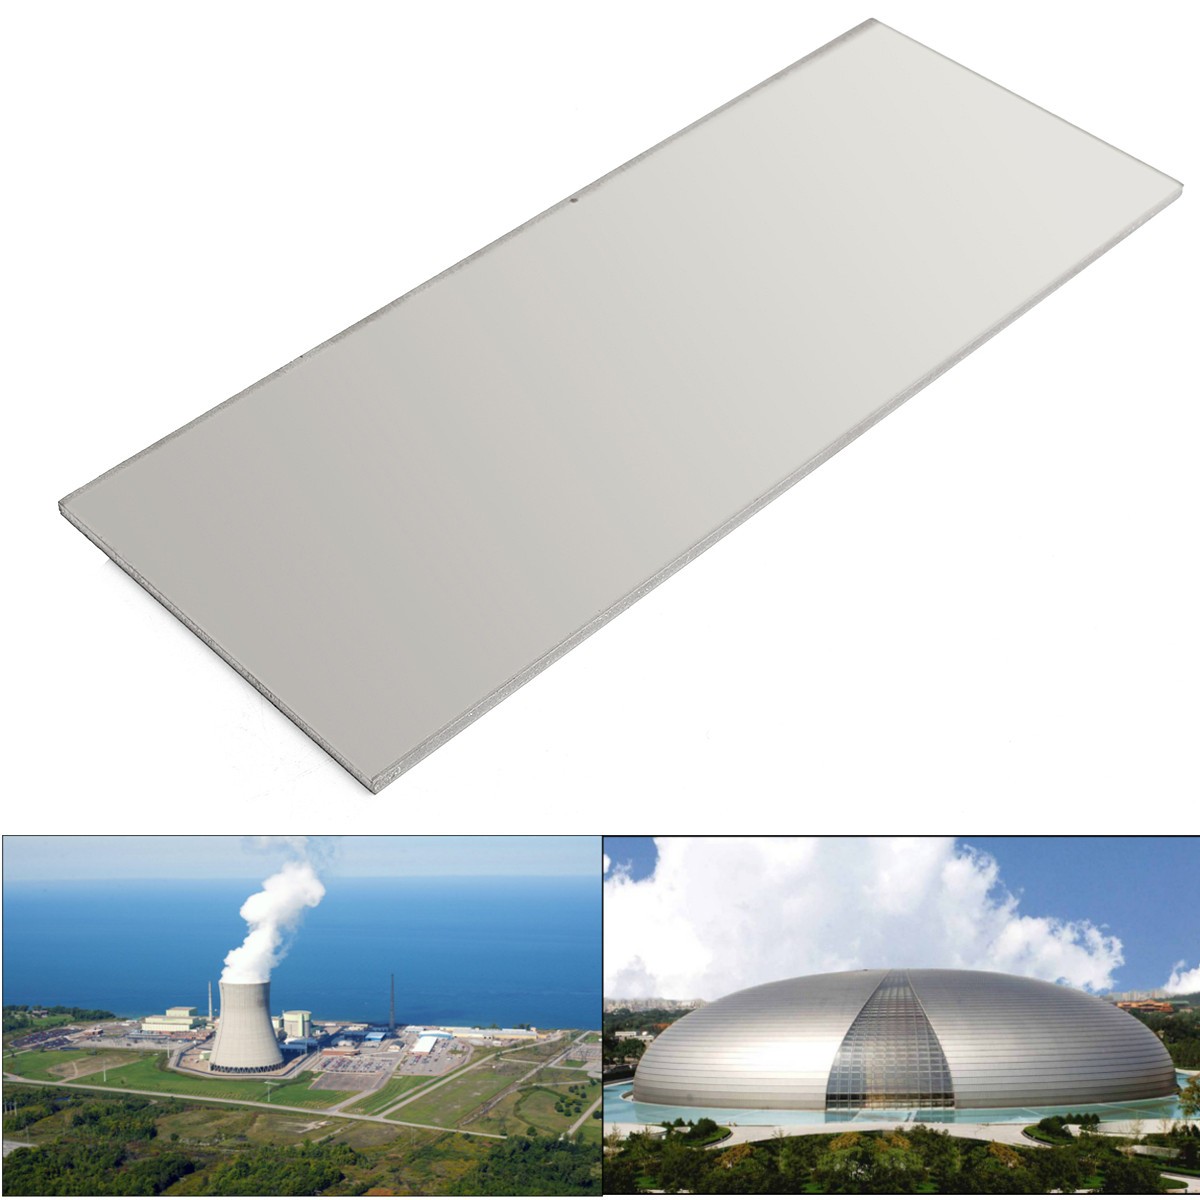 Titanium-Alloy-Grade5-6al-4v-Sheet-Plate-Metalworking-Supplies-1105487